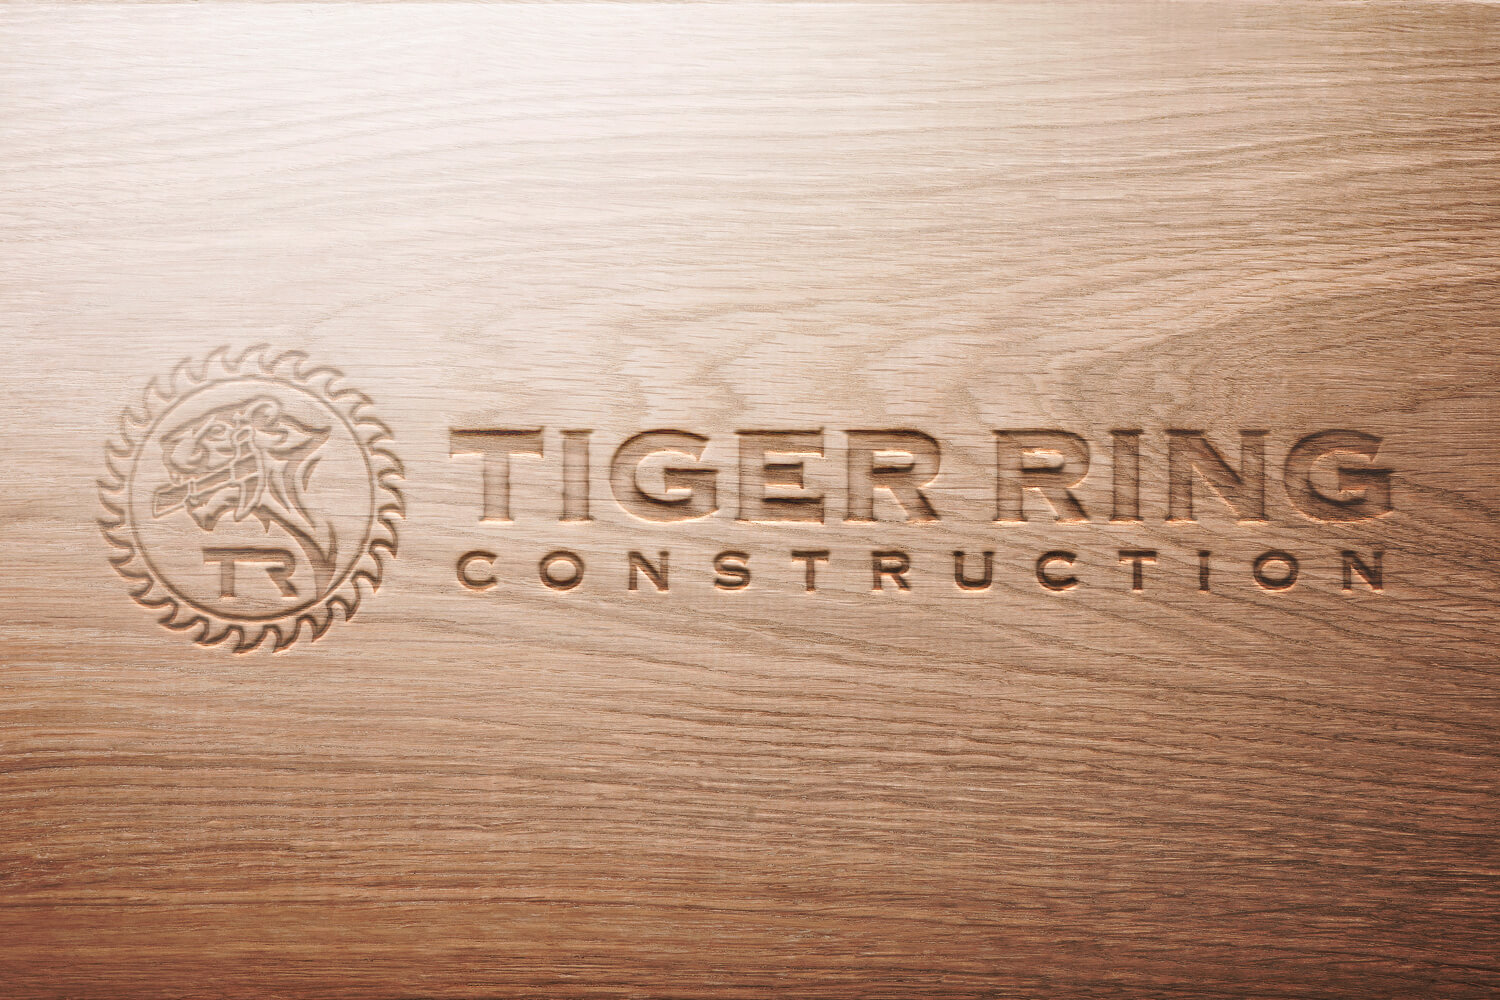 Open Bookmarks Co. Portfolio Tiger Ring Construction Website WordPress